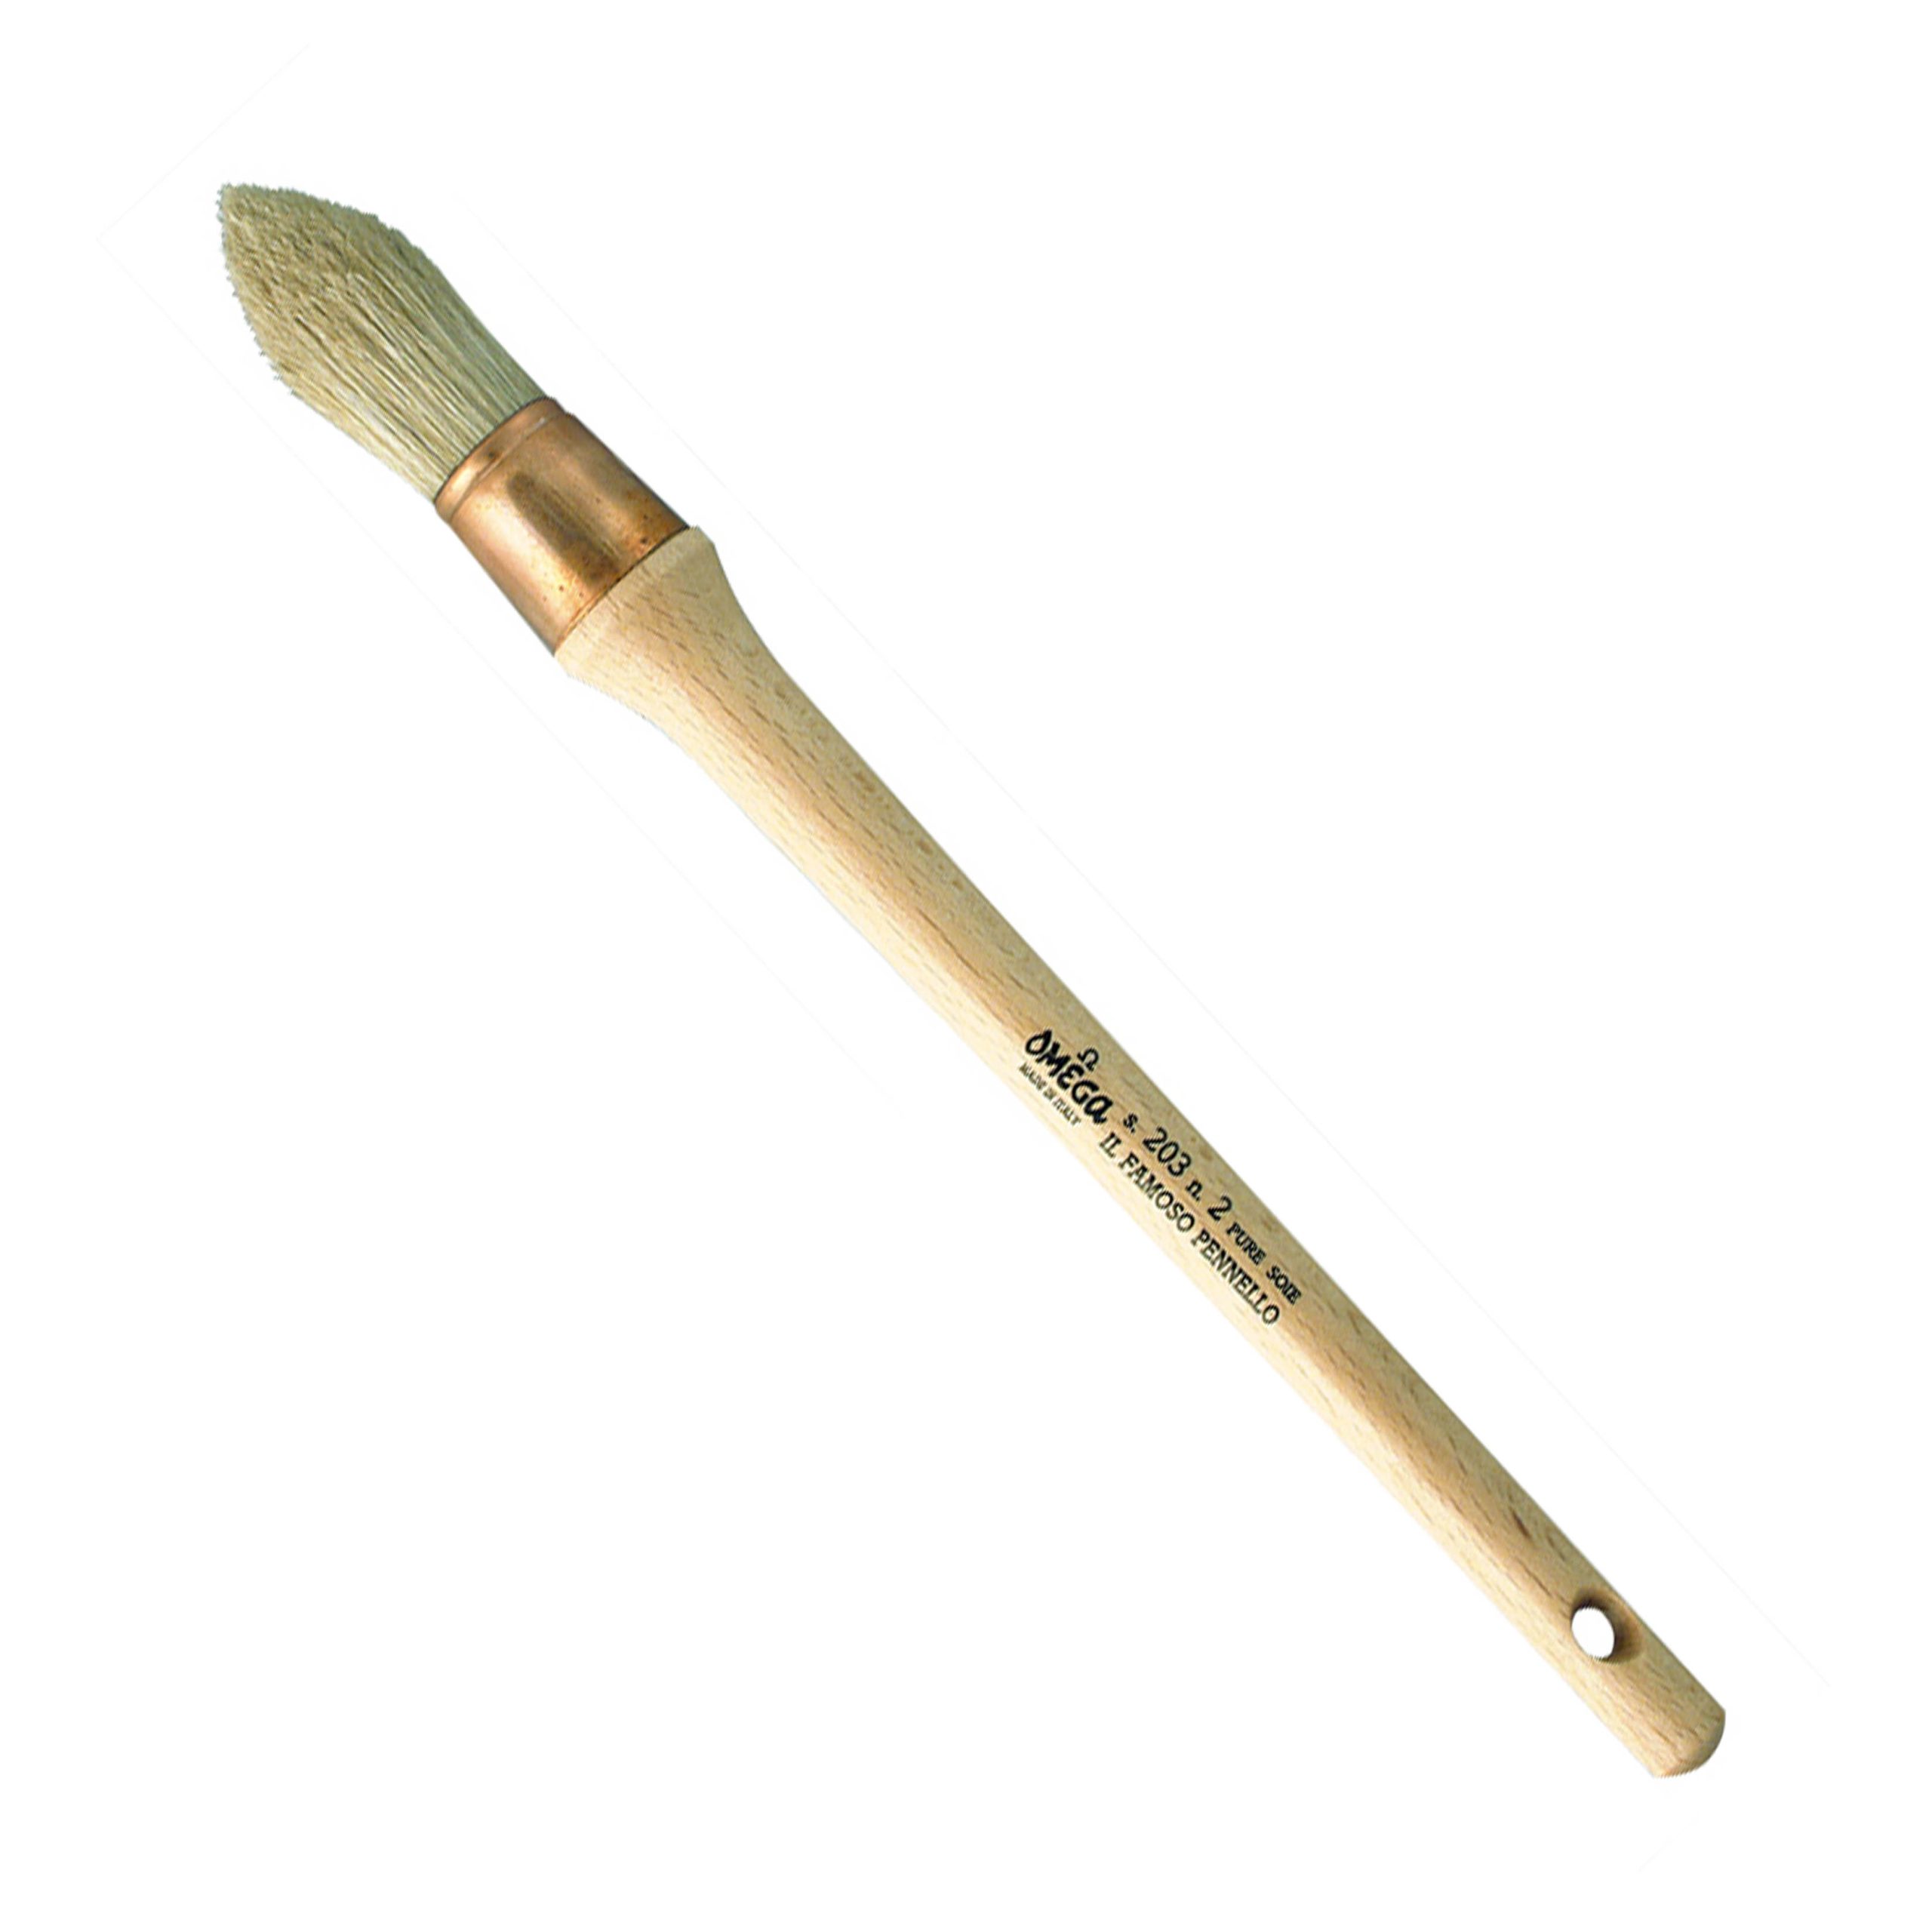 Omega : S203 Pointed Sash Brush